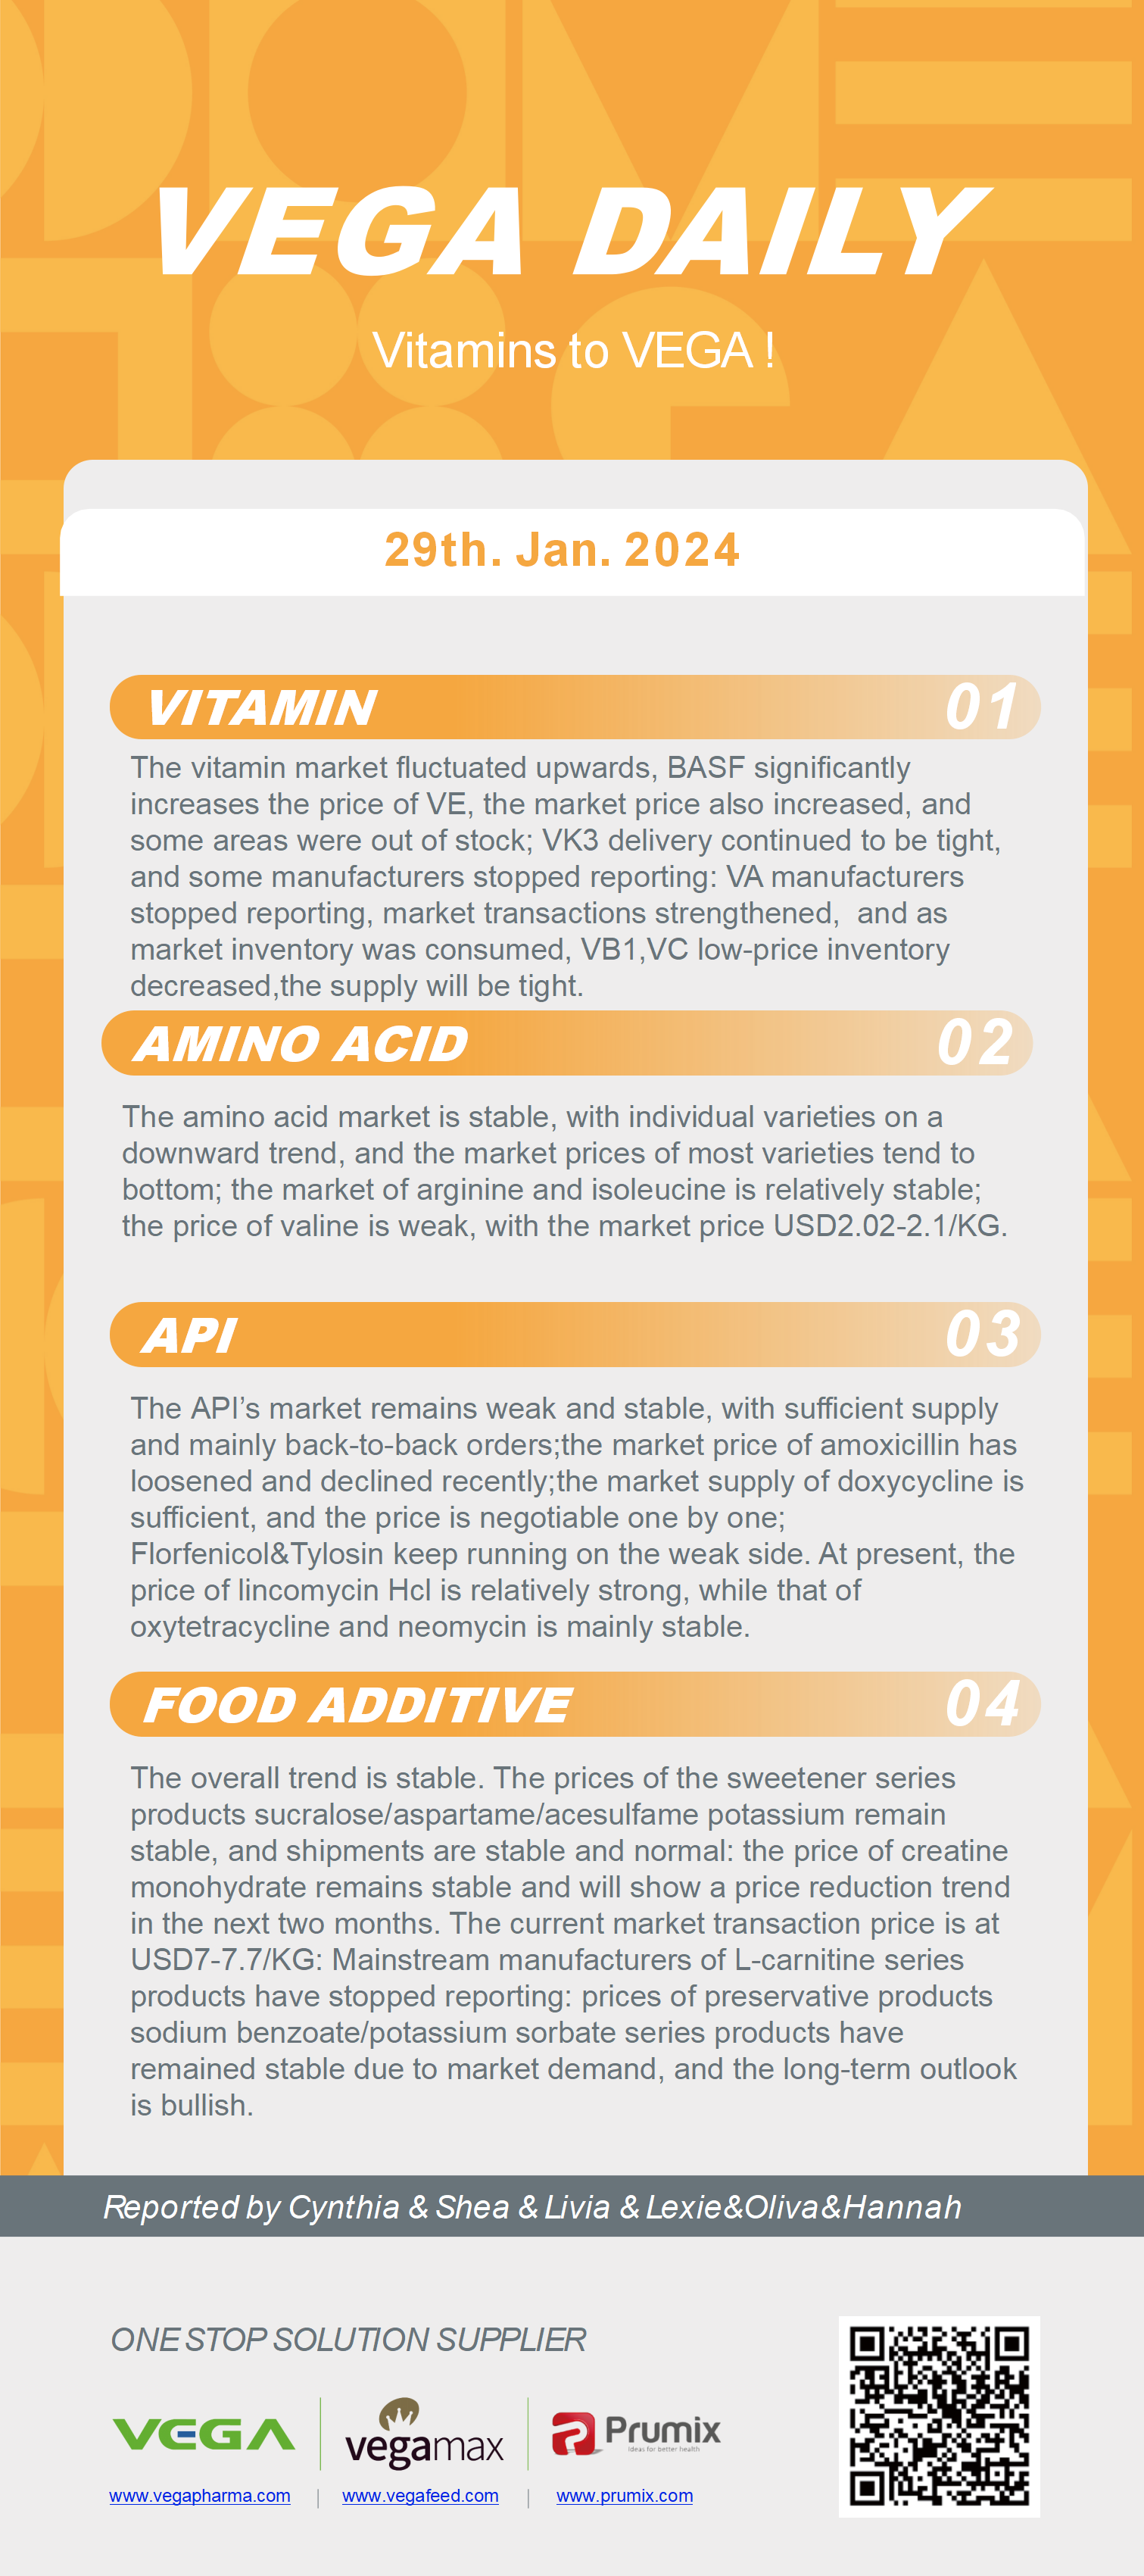 Vega Daily Dated on Jan 29th 2024 Vitamin Amino Acid APl Food Additives.png